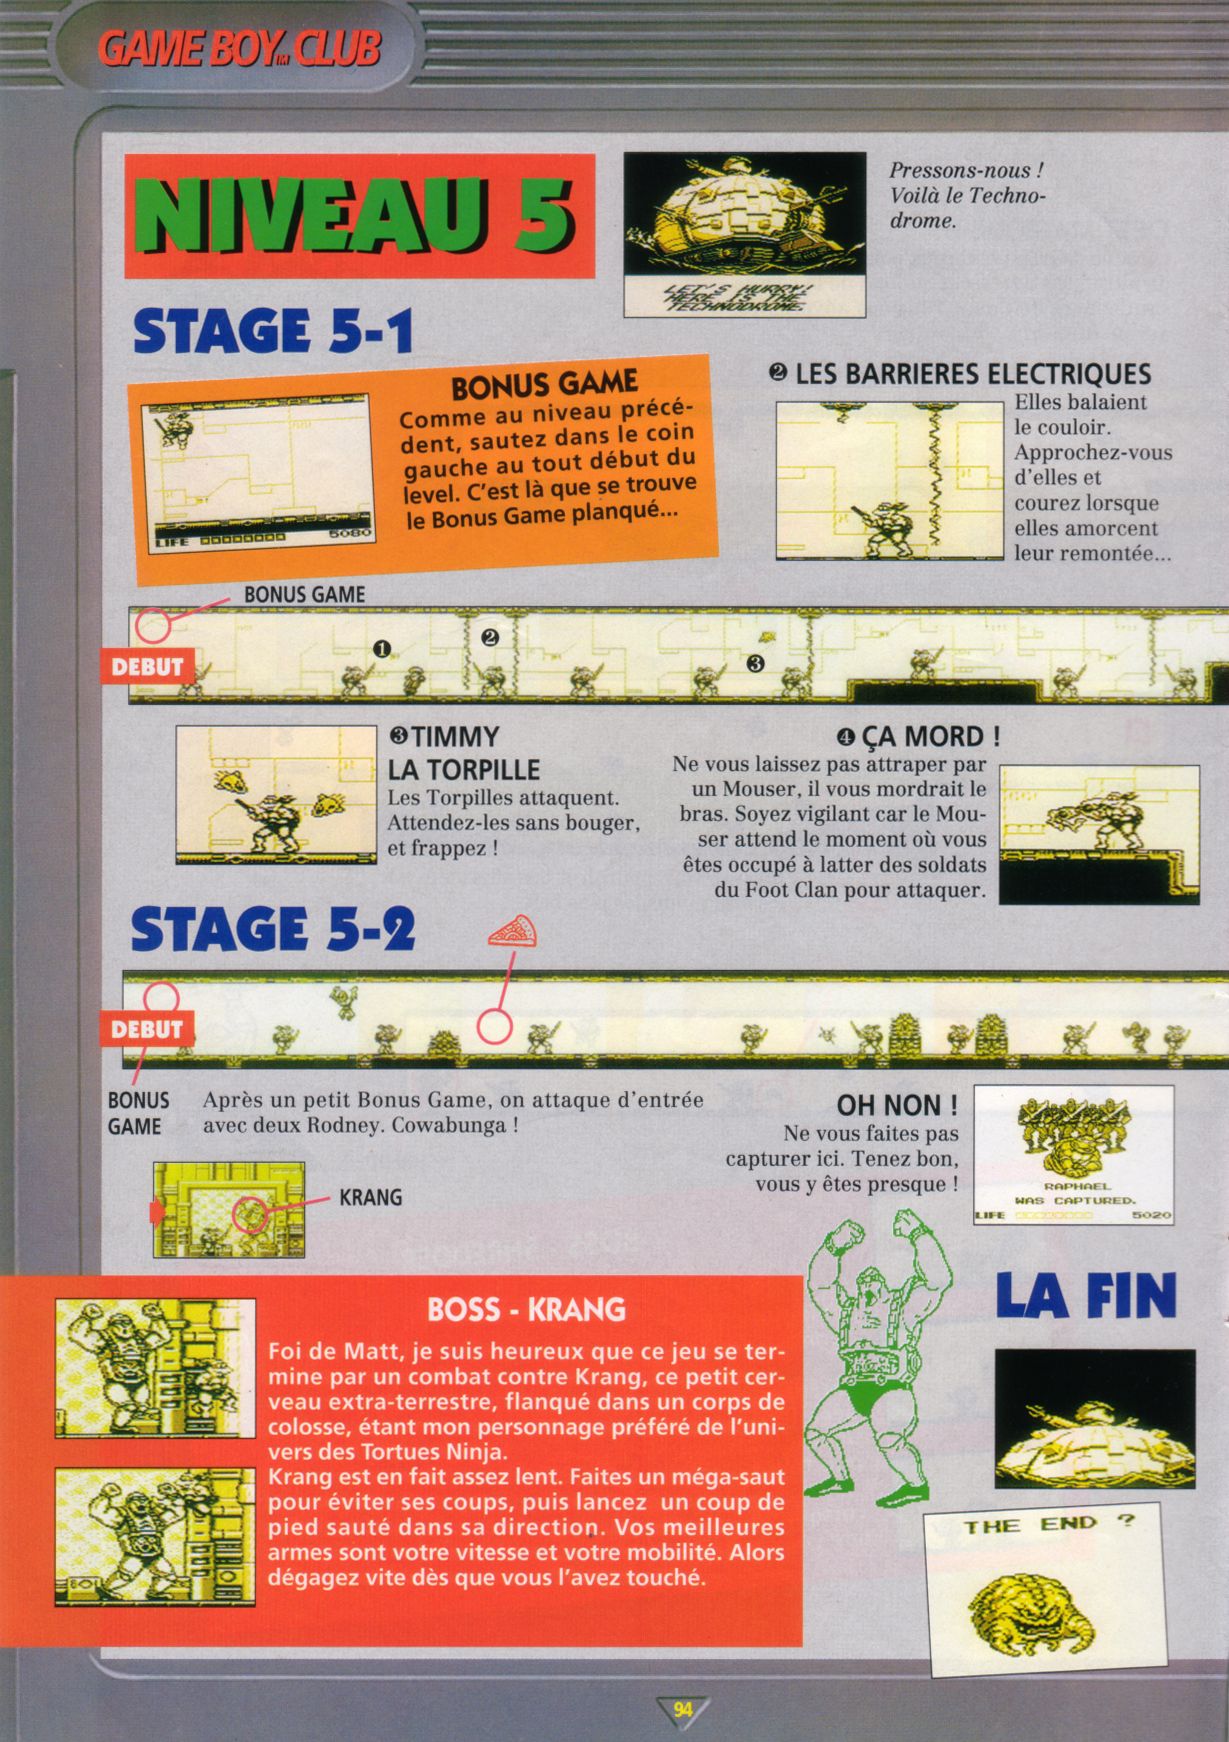 tests//1052/Nintendo Player 004 - Page 094 (1992-05-06).jpg